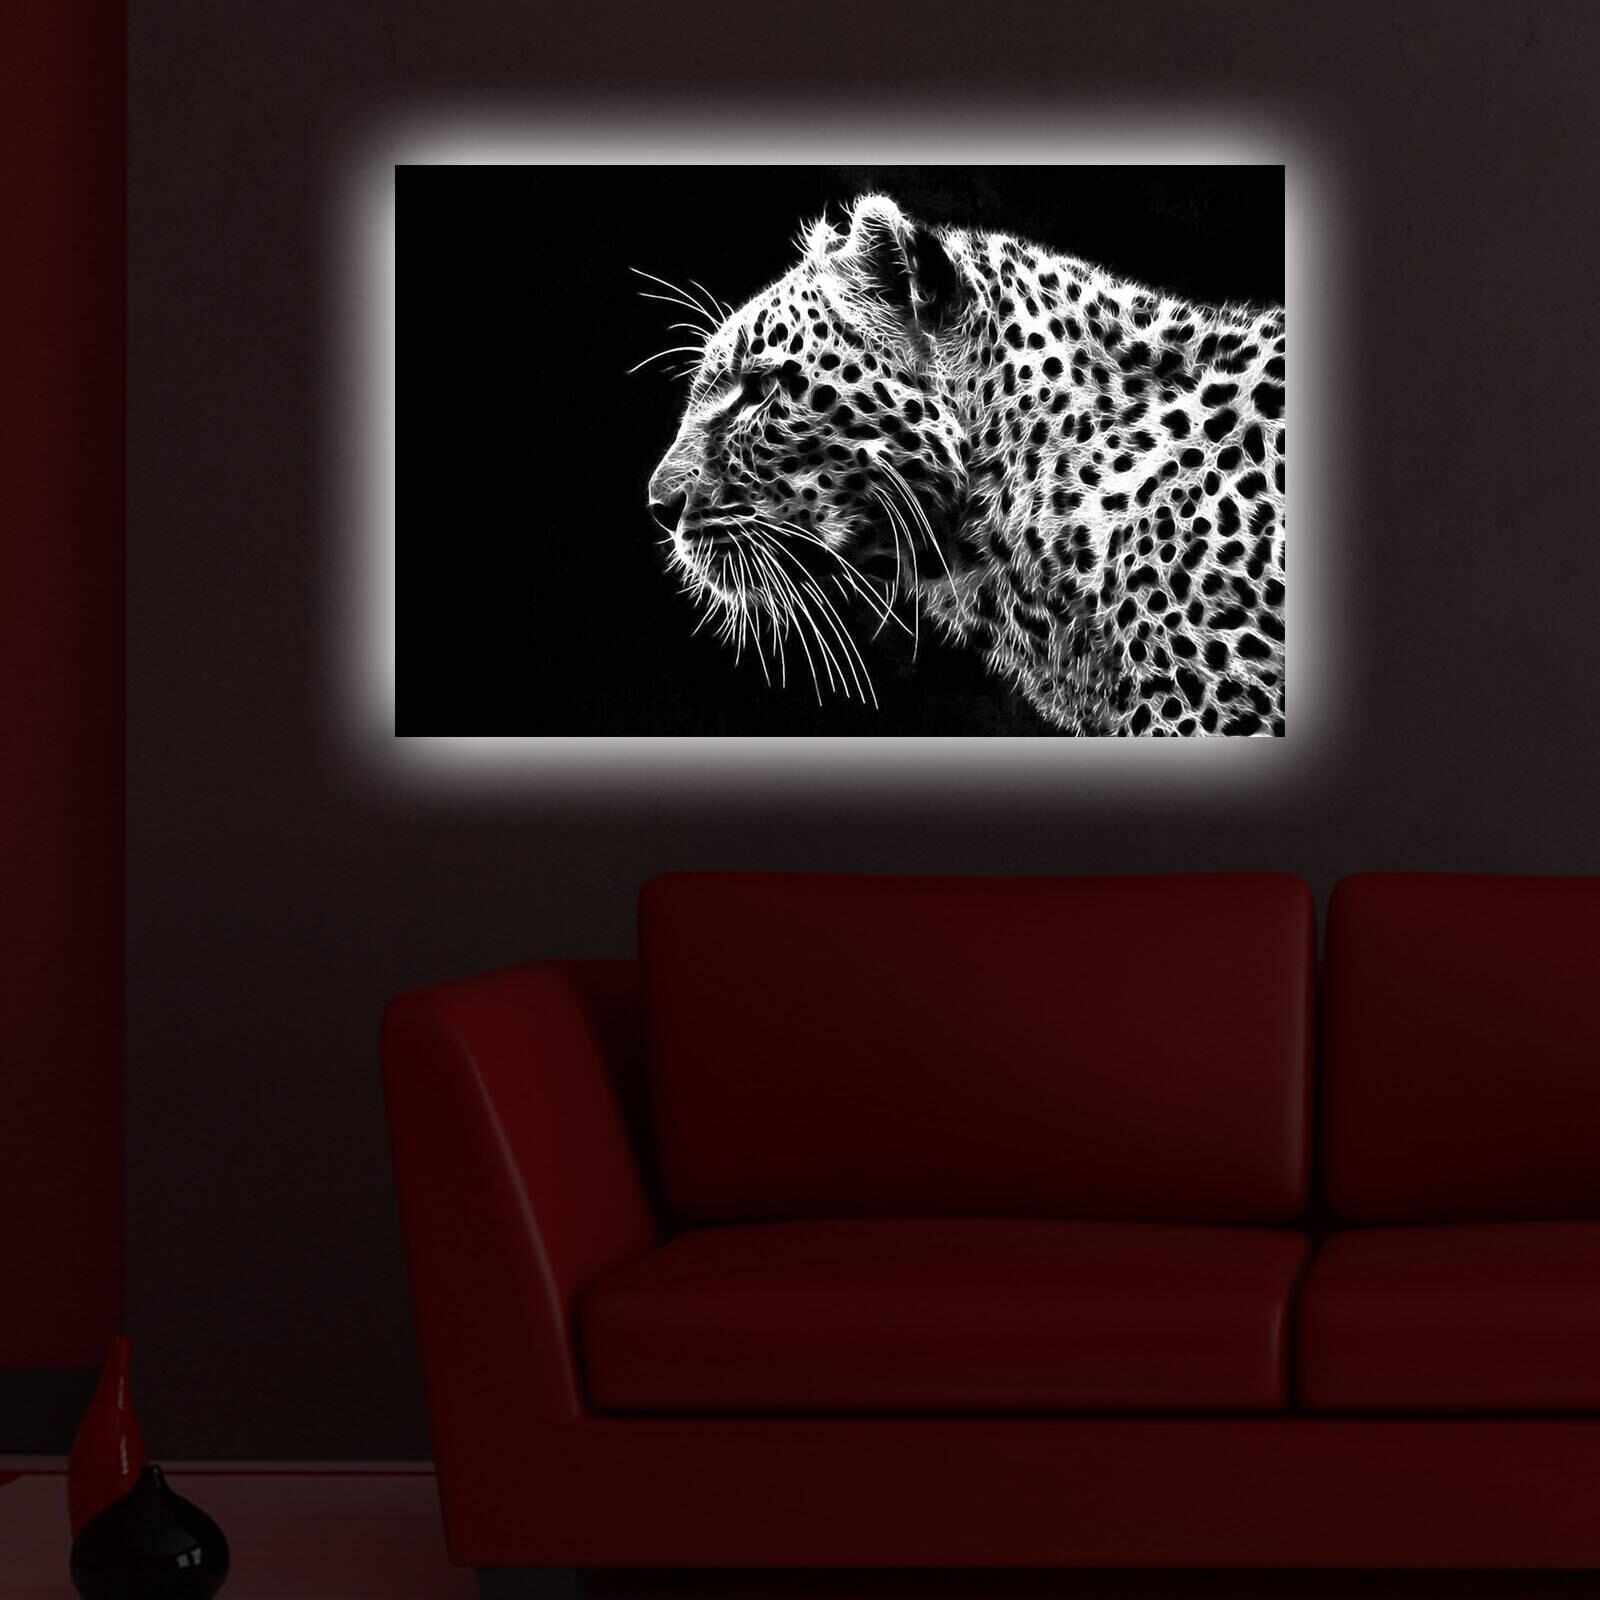 Tablou Canvas Led, Tiger 4570DACT-44 Negru / Alb, 70 x 45 cm